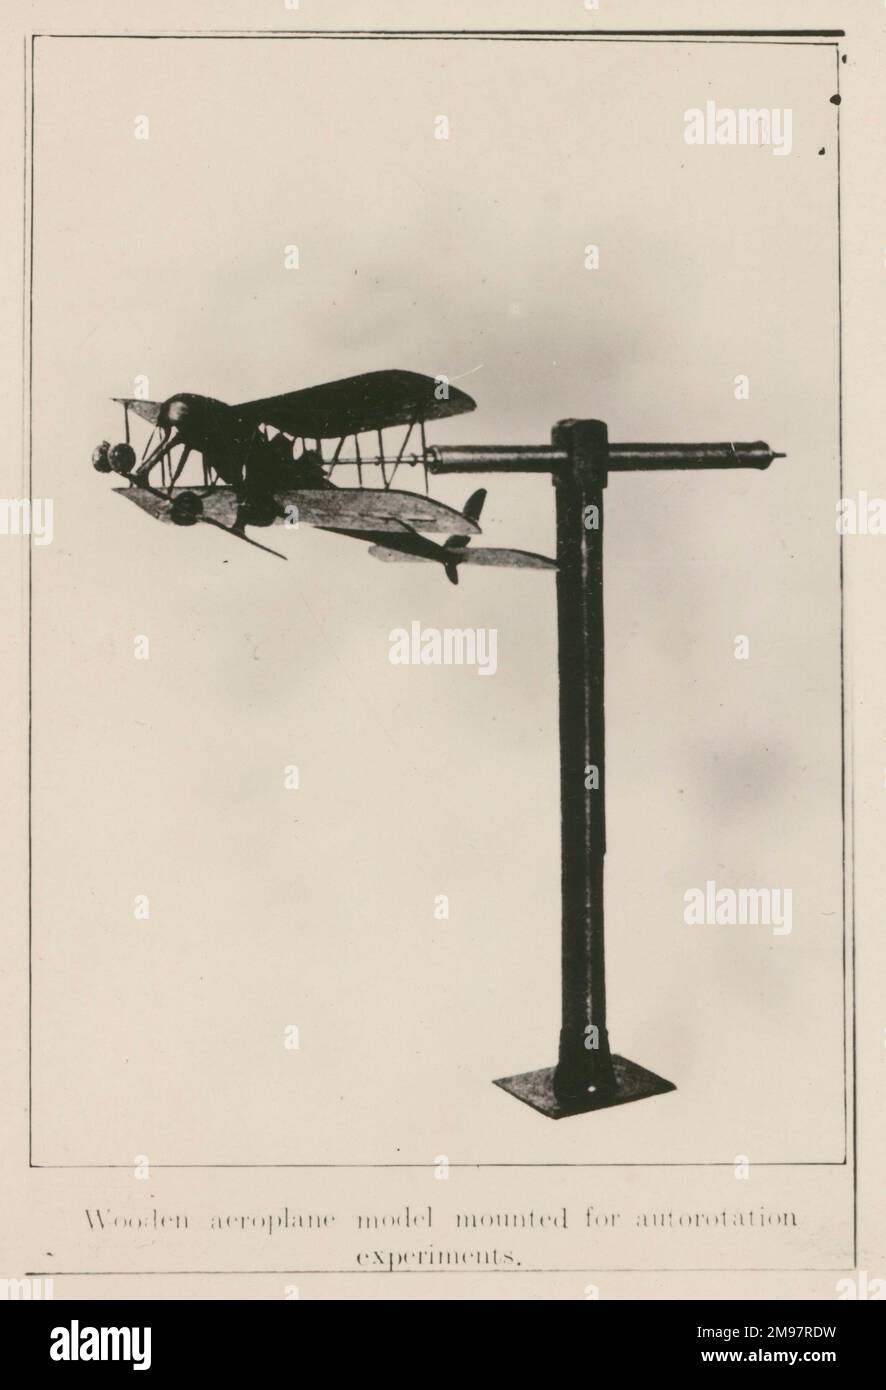 Wooden aeroplane model mounted for autorotation experiments at the Royal Aircraft Establishment, Farnborough. Stock Photo